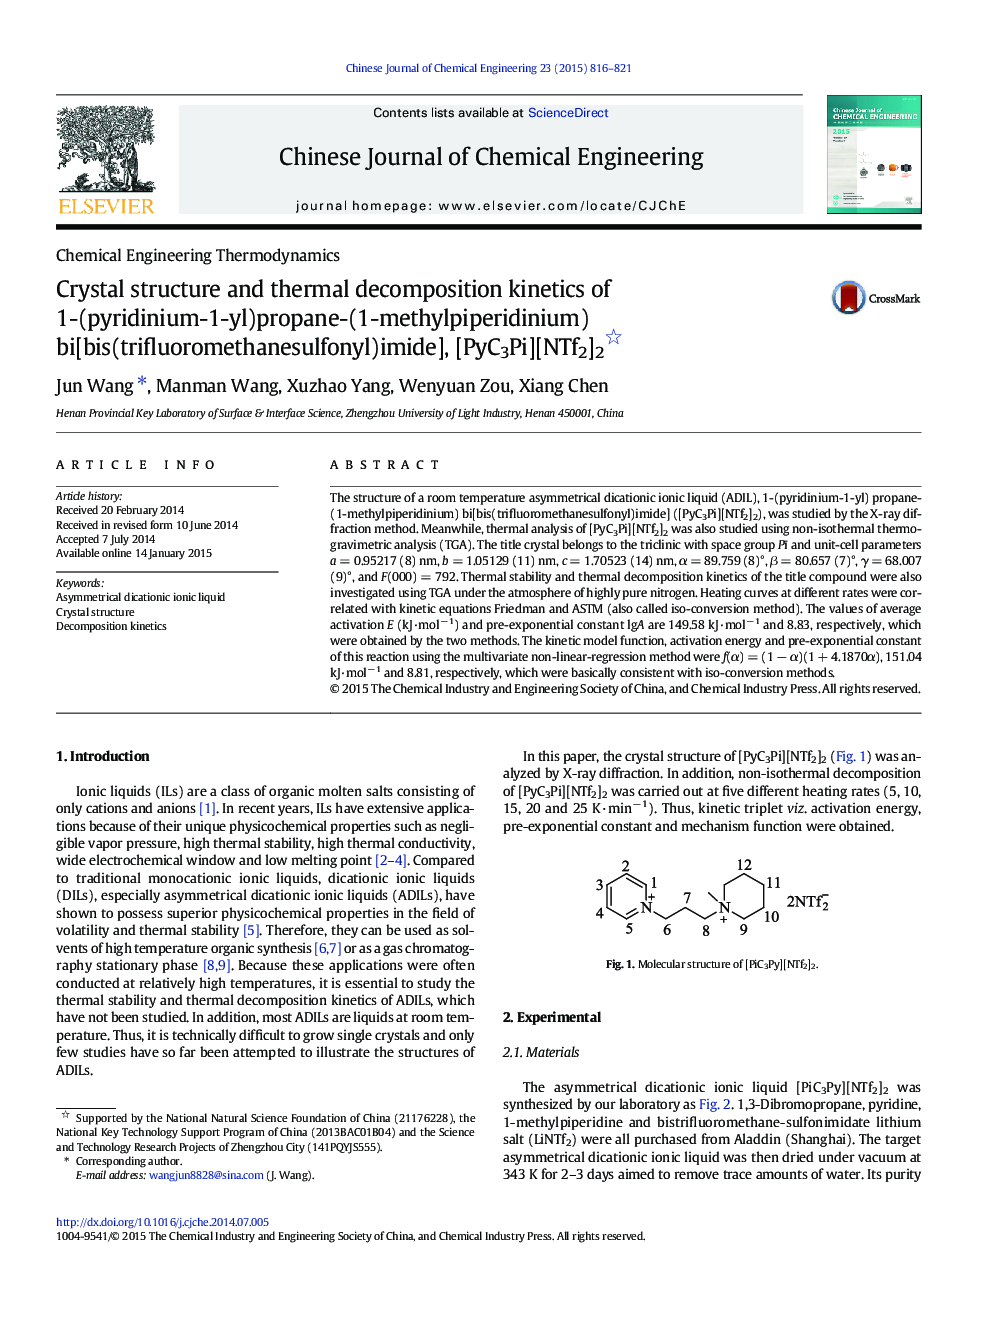 Crystal structure and thermal decomposition kinetics of 1-(pyridinium-1-yl)propane-(1-methylpiperidinium) bi[bis(trifluoromethanesulfonyl)imide], [PyC3Pi][NTf2]2